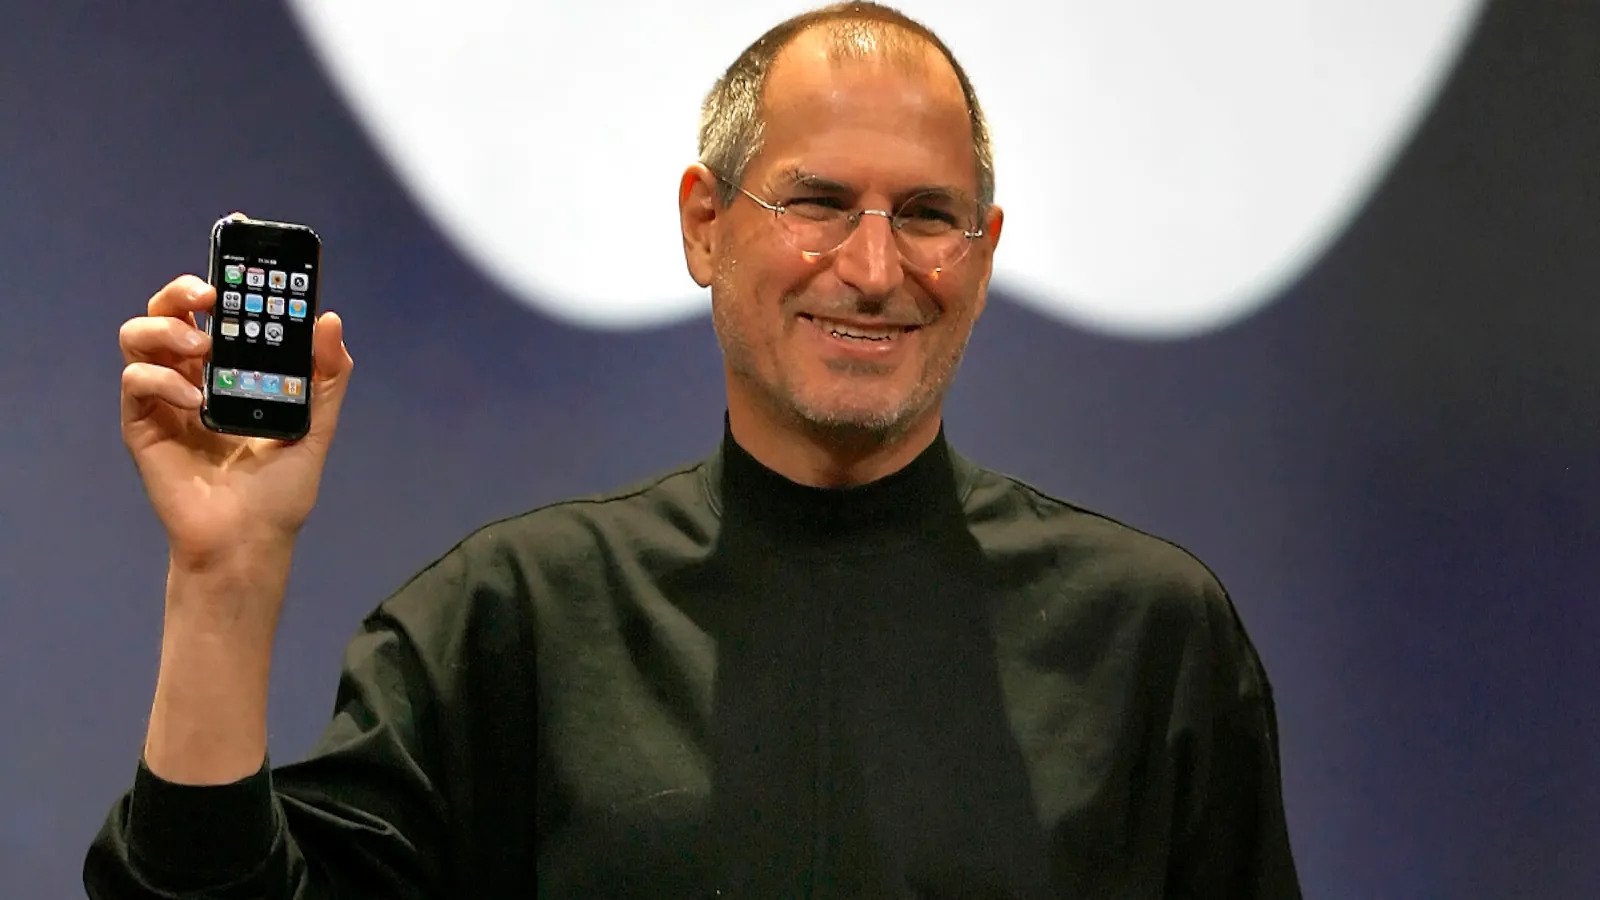 Steve Jobs Iphone 1